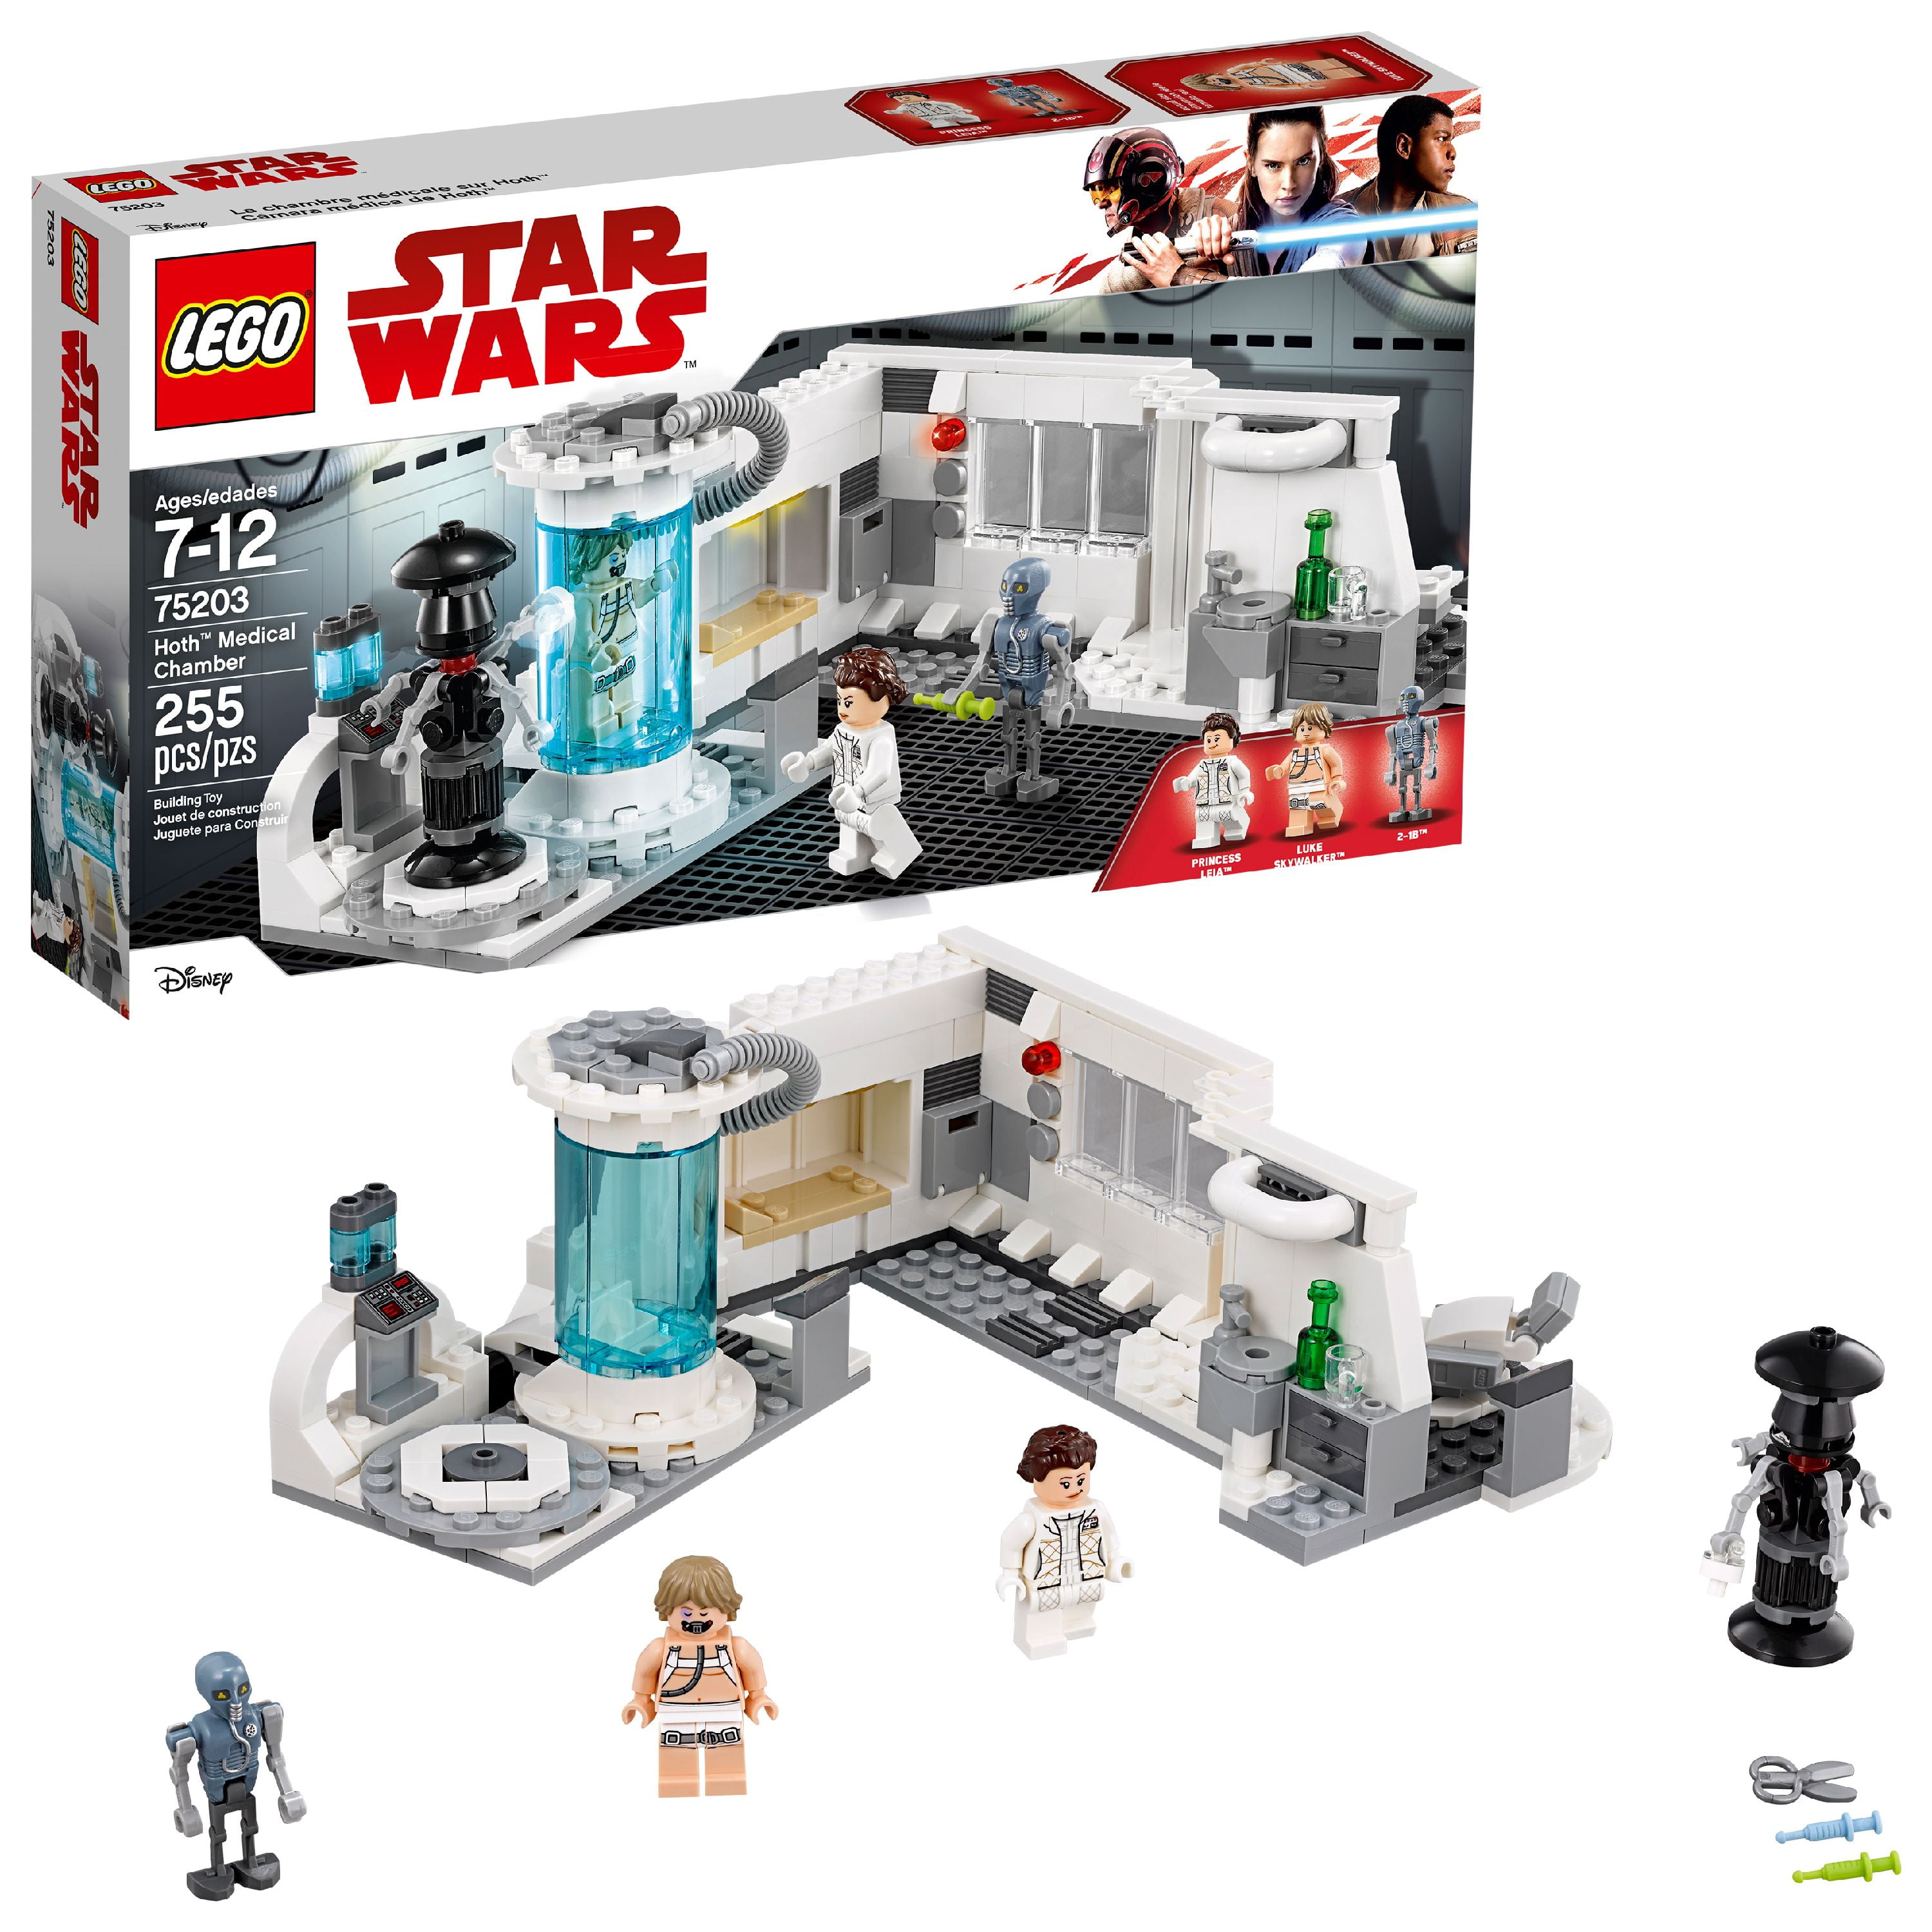 LEGO STAR WARS Bacta Tank Luke Skywalker  MINIFIG new from Lego set 75203 New 